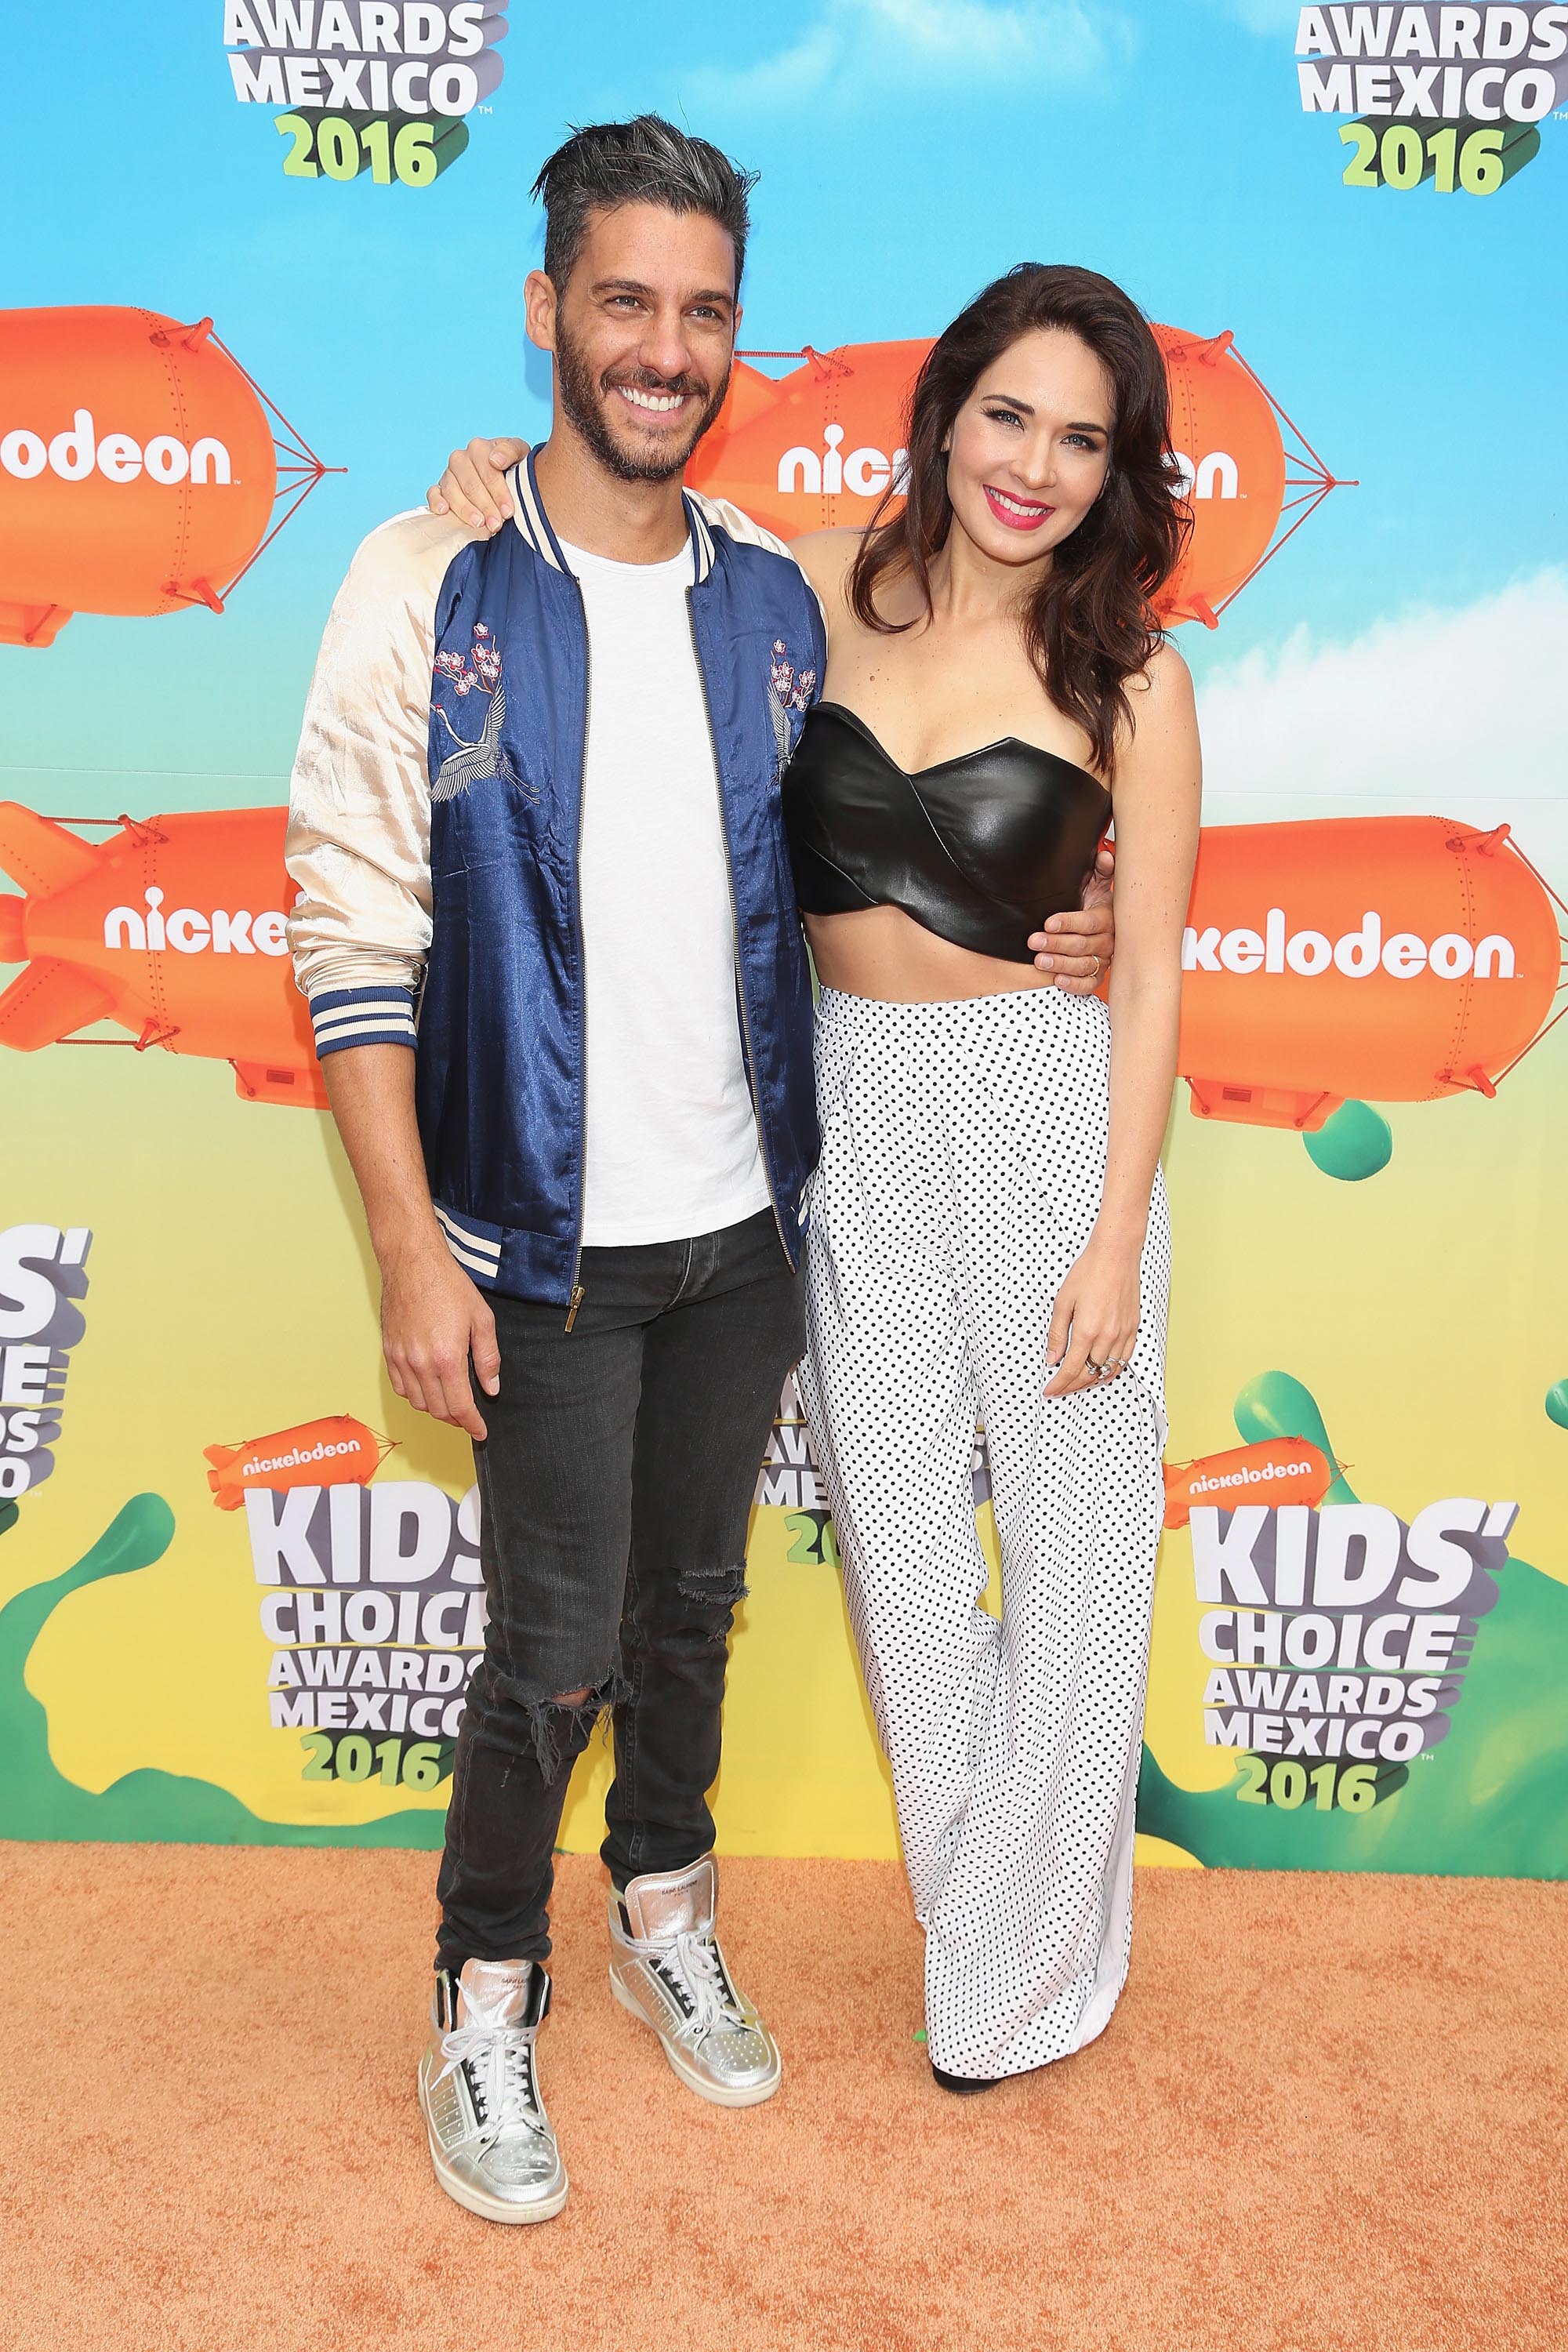 Adriana Louvier attends the Kids Choice Awards Mexico 2016